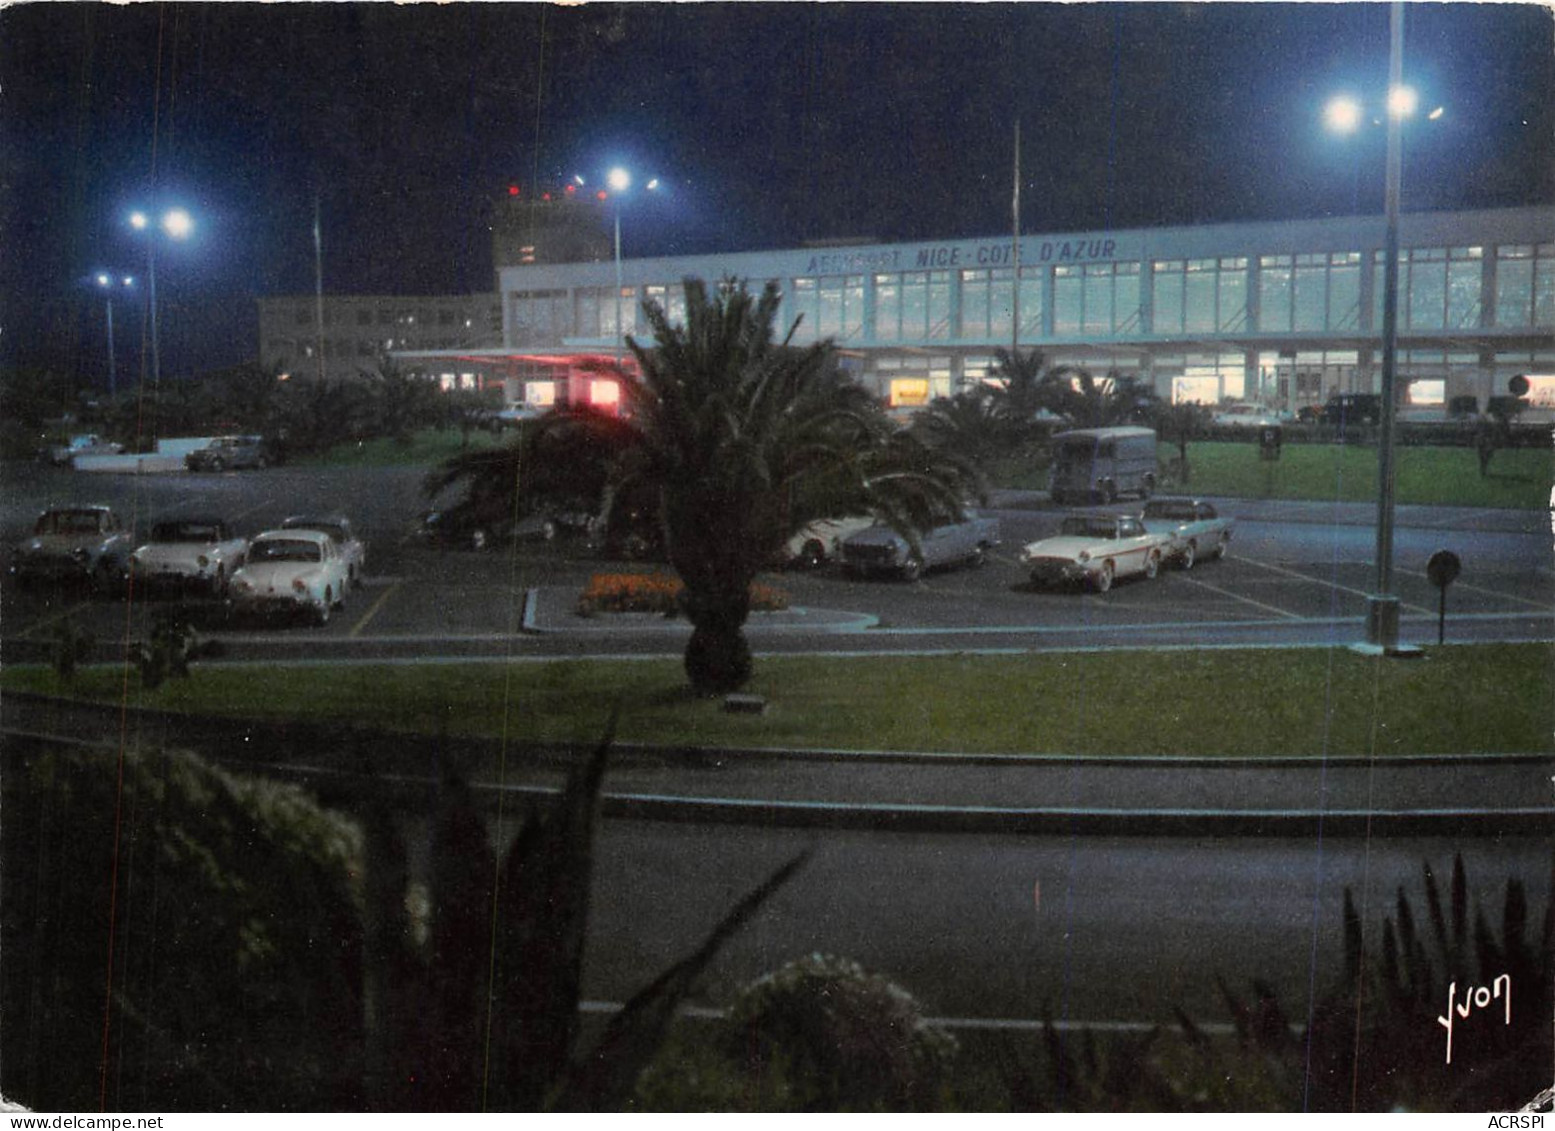  NICE L AEROGARE Prise De Nuit 1(scan Recto-verso) MA366 - Luftfahrt - Flughafen